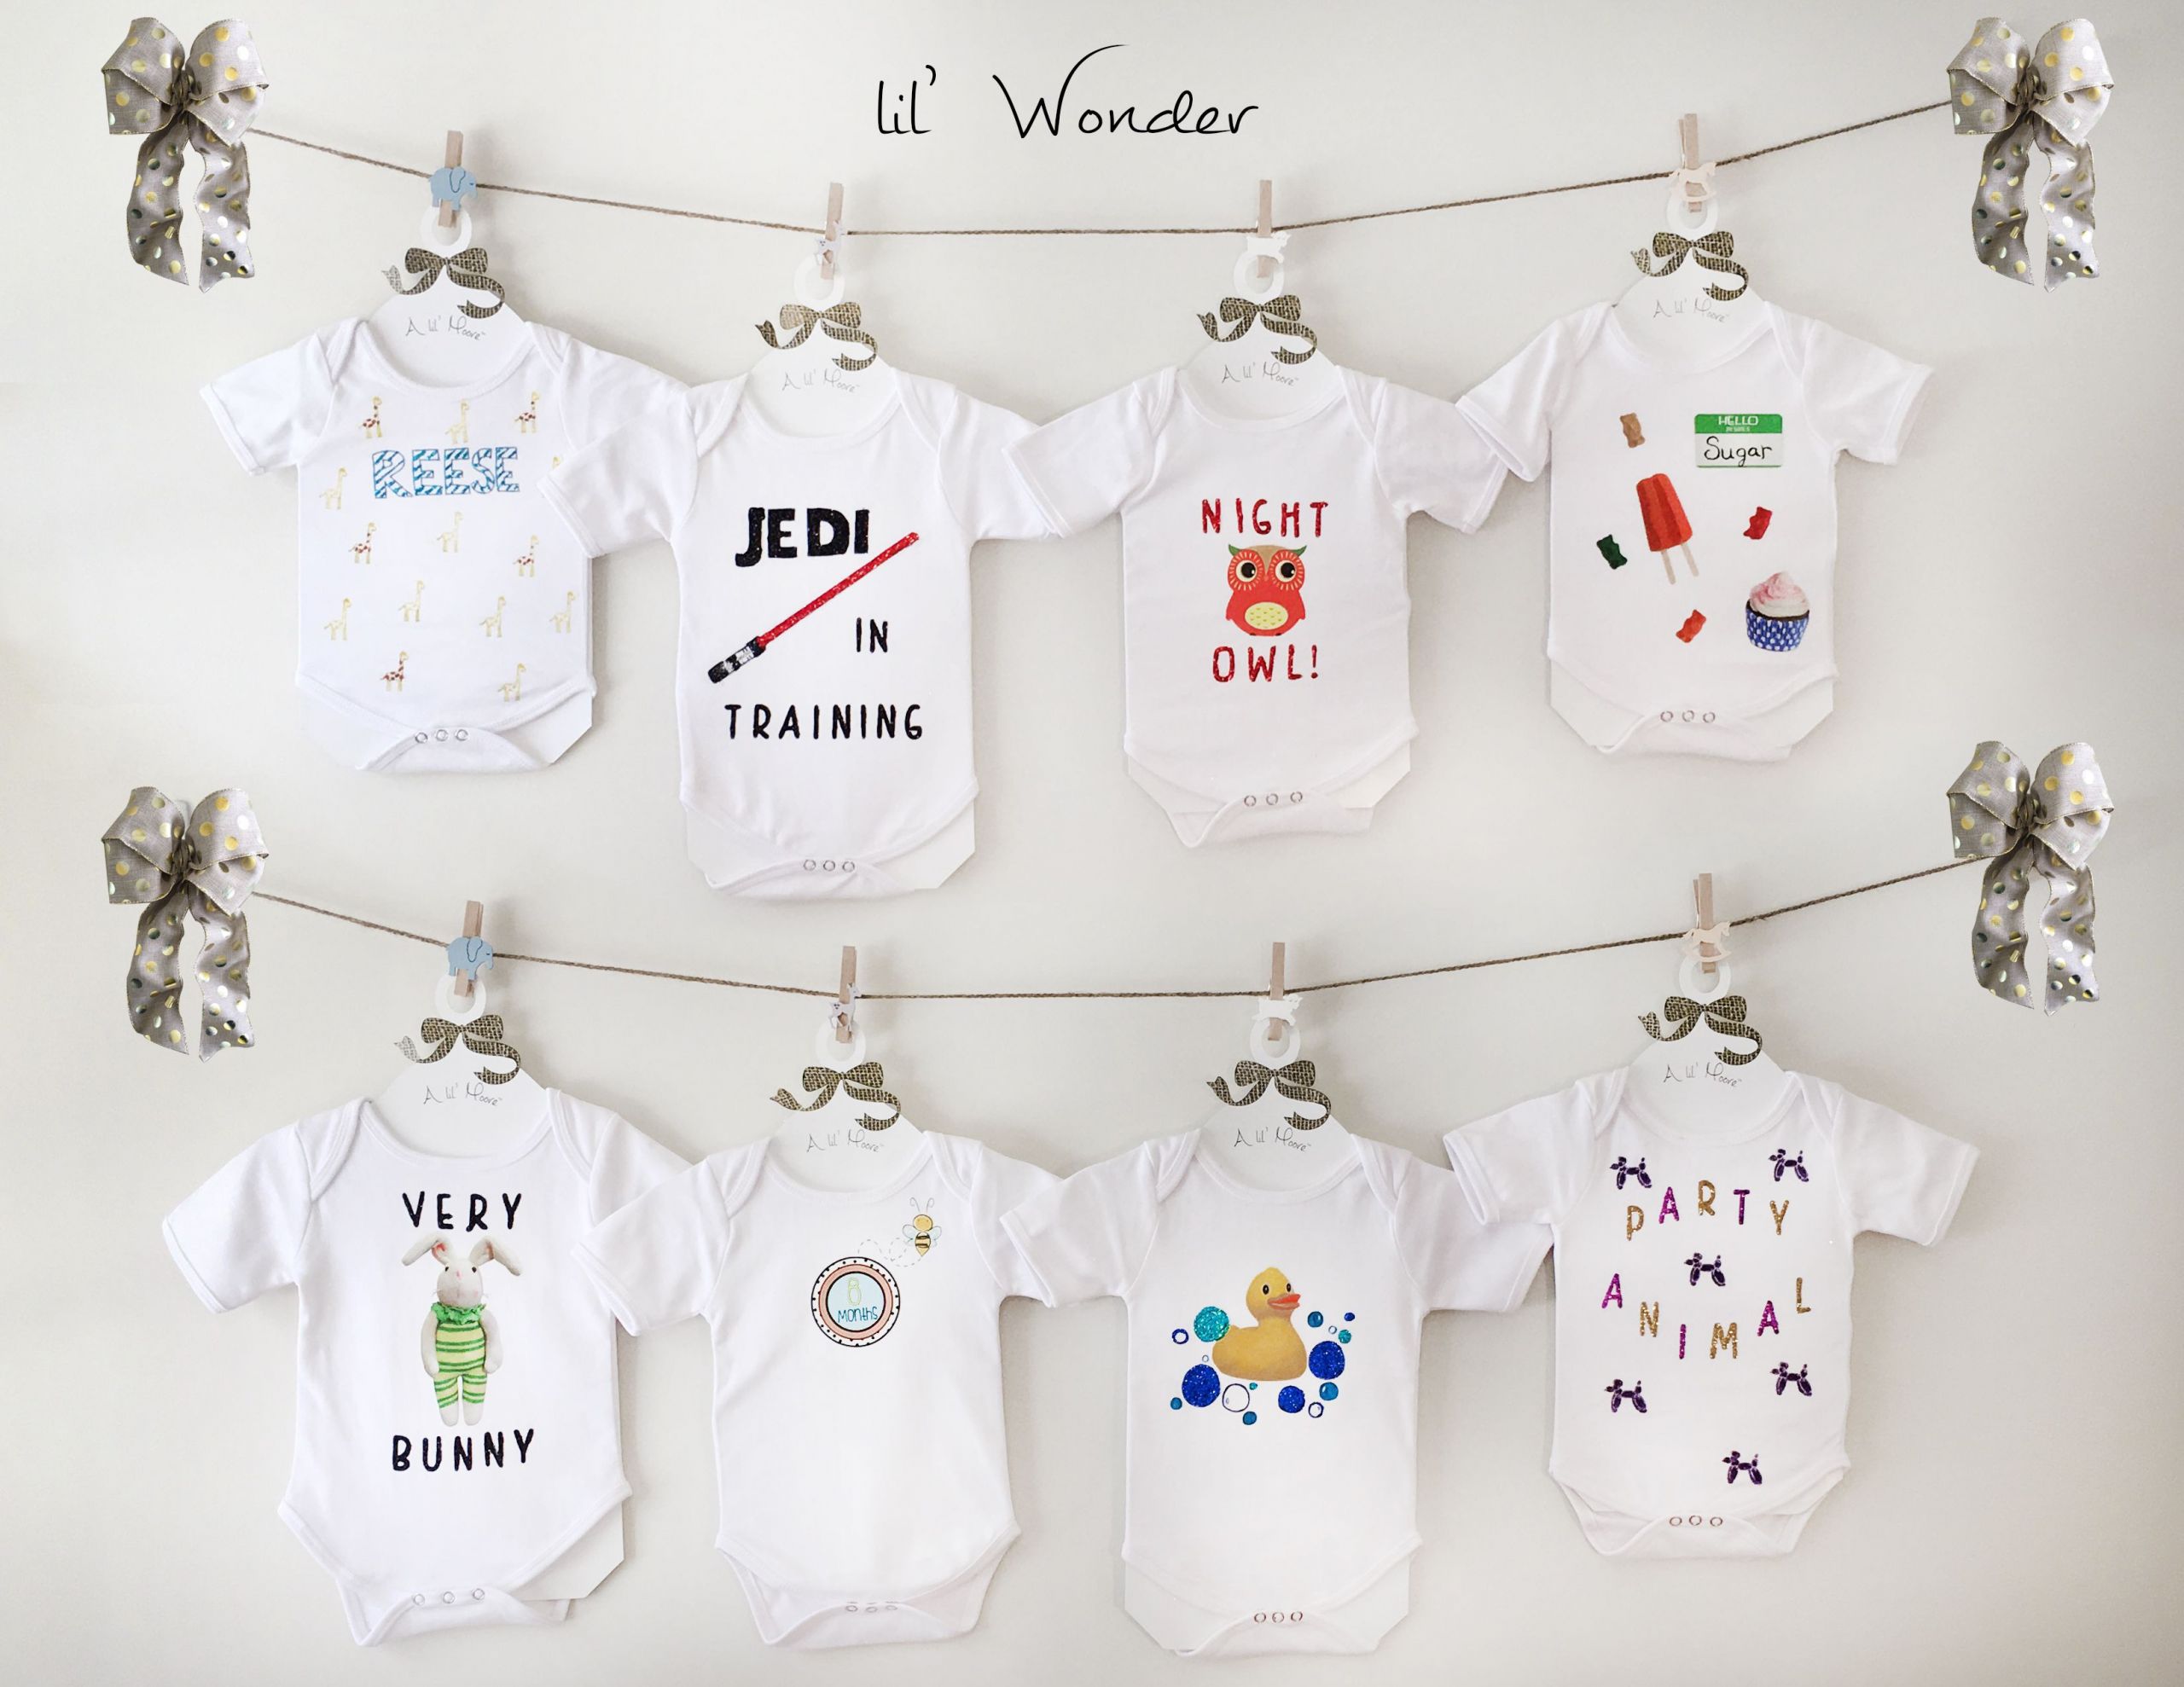 Baby Shower Onesie Decorating Ideas
 The Ultimate Baby Shower Gift A onesie decorating kit for